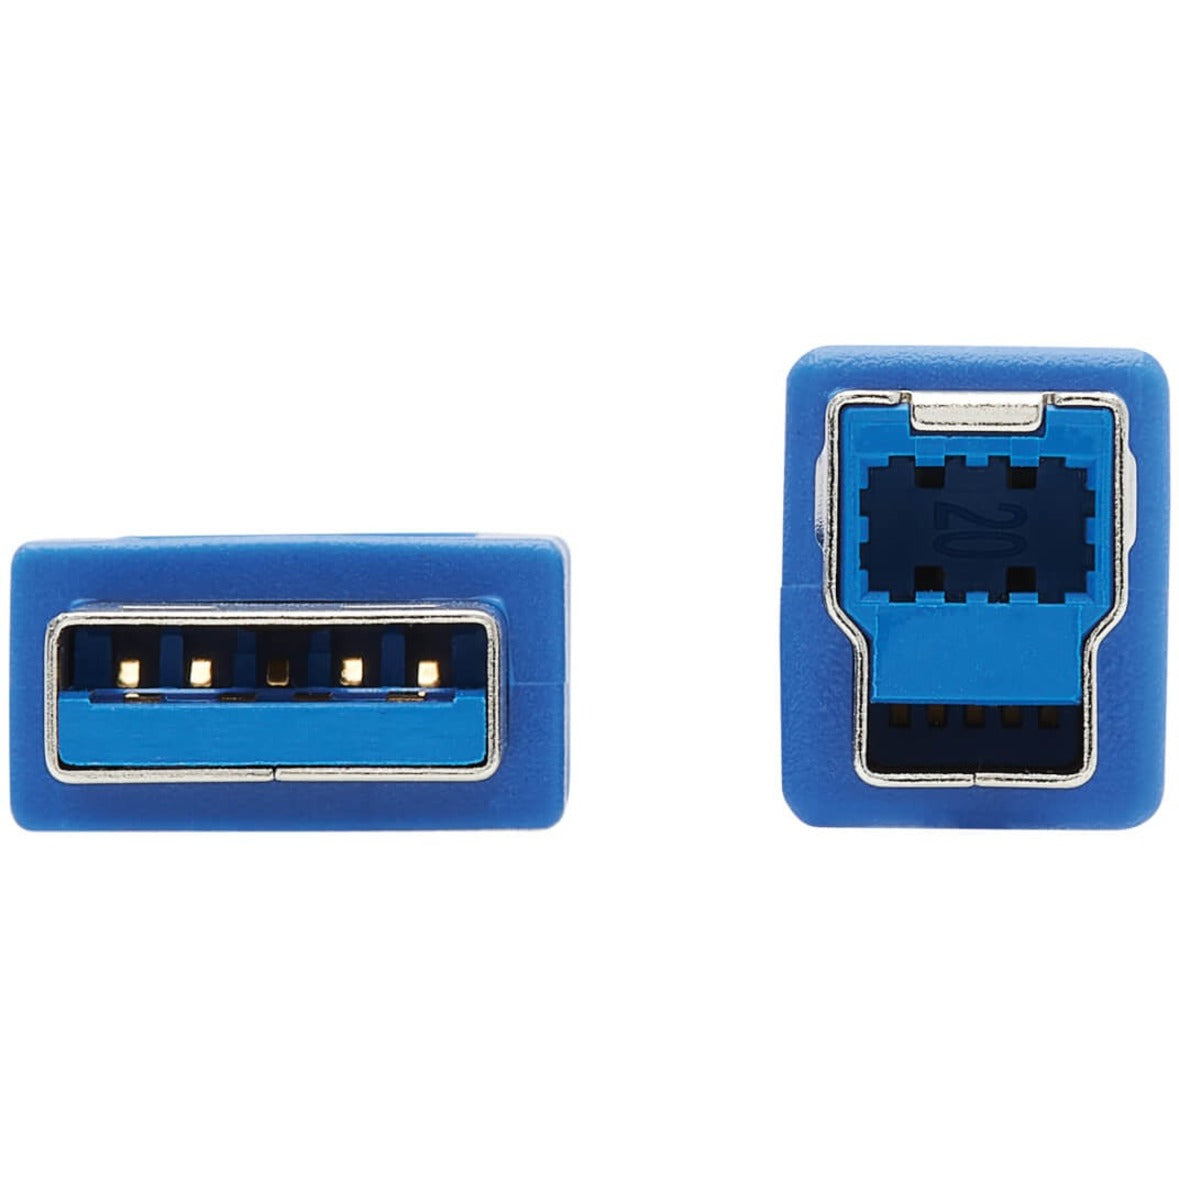 Tripp Lite P785-HKIT06 Cable Kit, HDMI, USB, Audio, 6 ft. Length